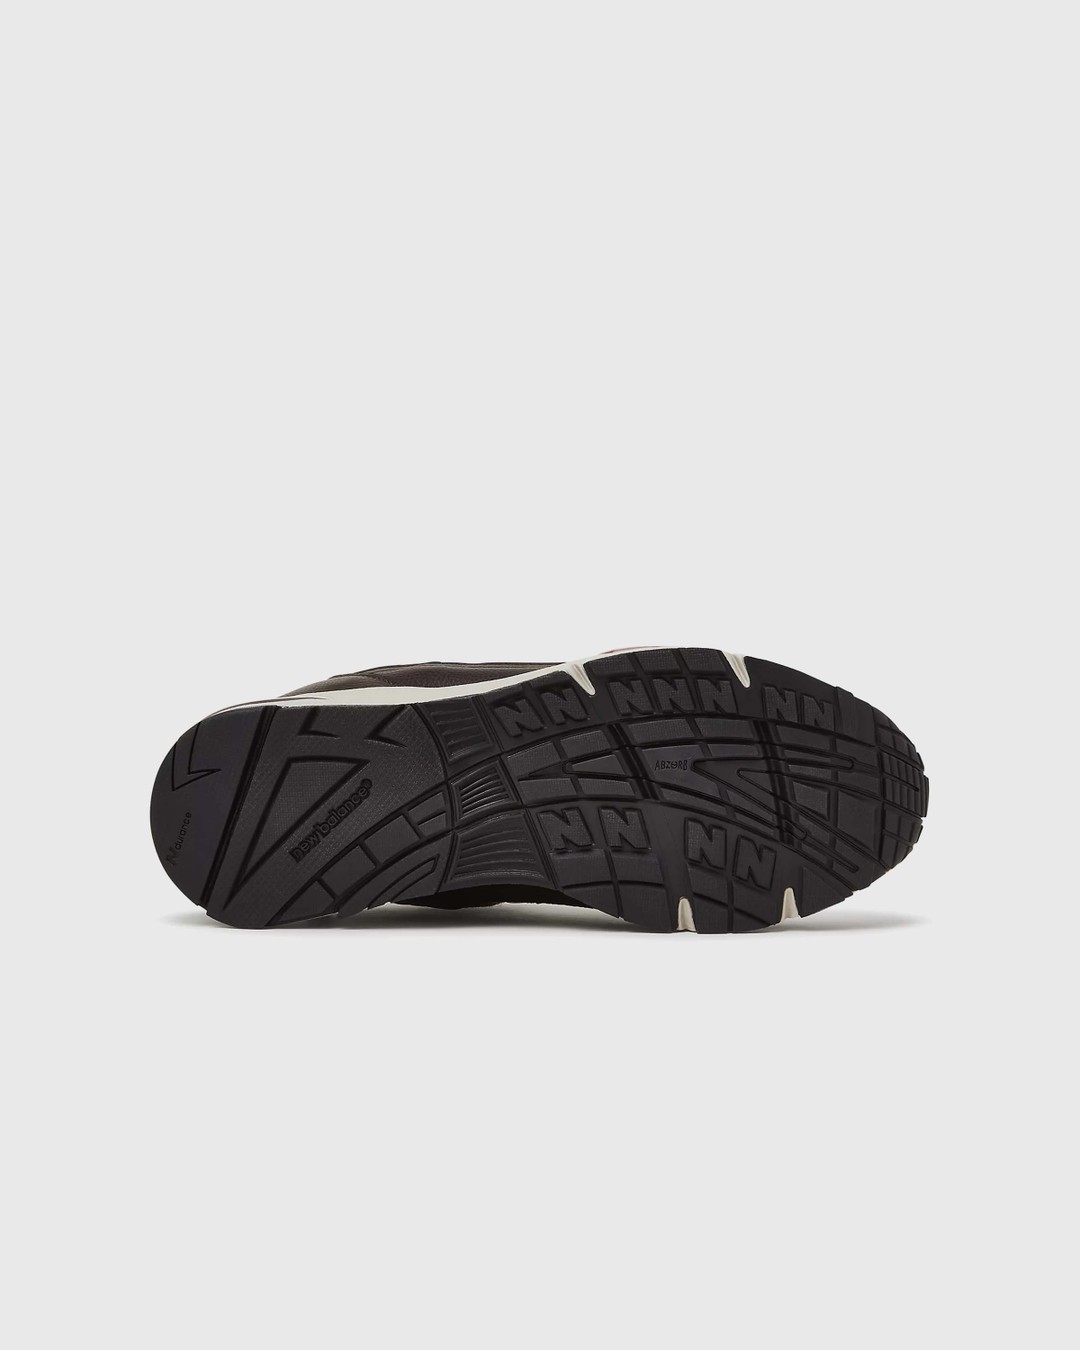 New Balance – M991GBI Brown - Low Top Sneakers - Brown - Image 6